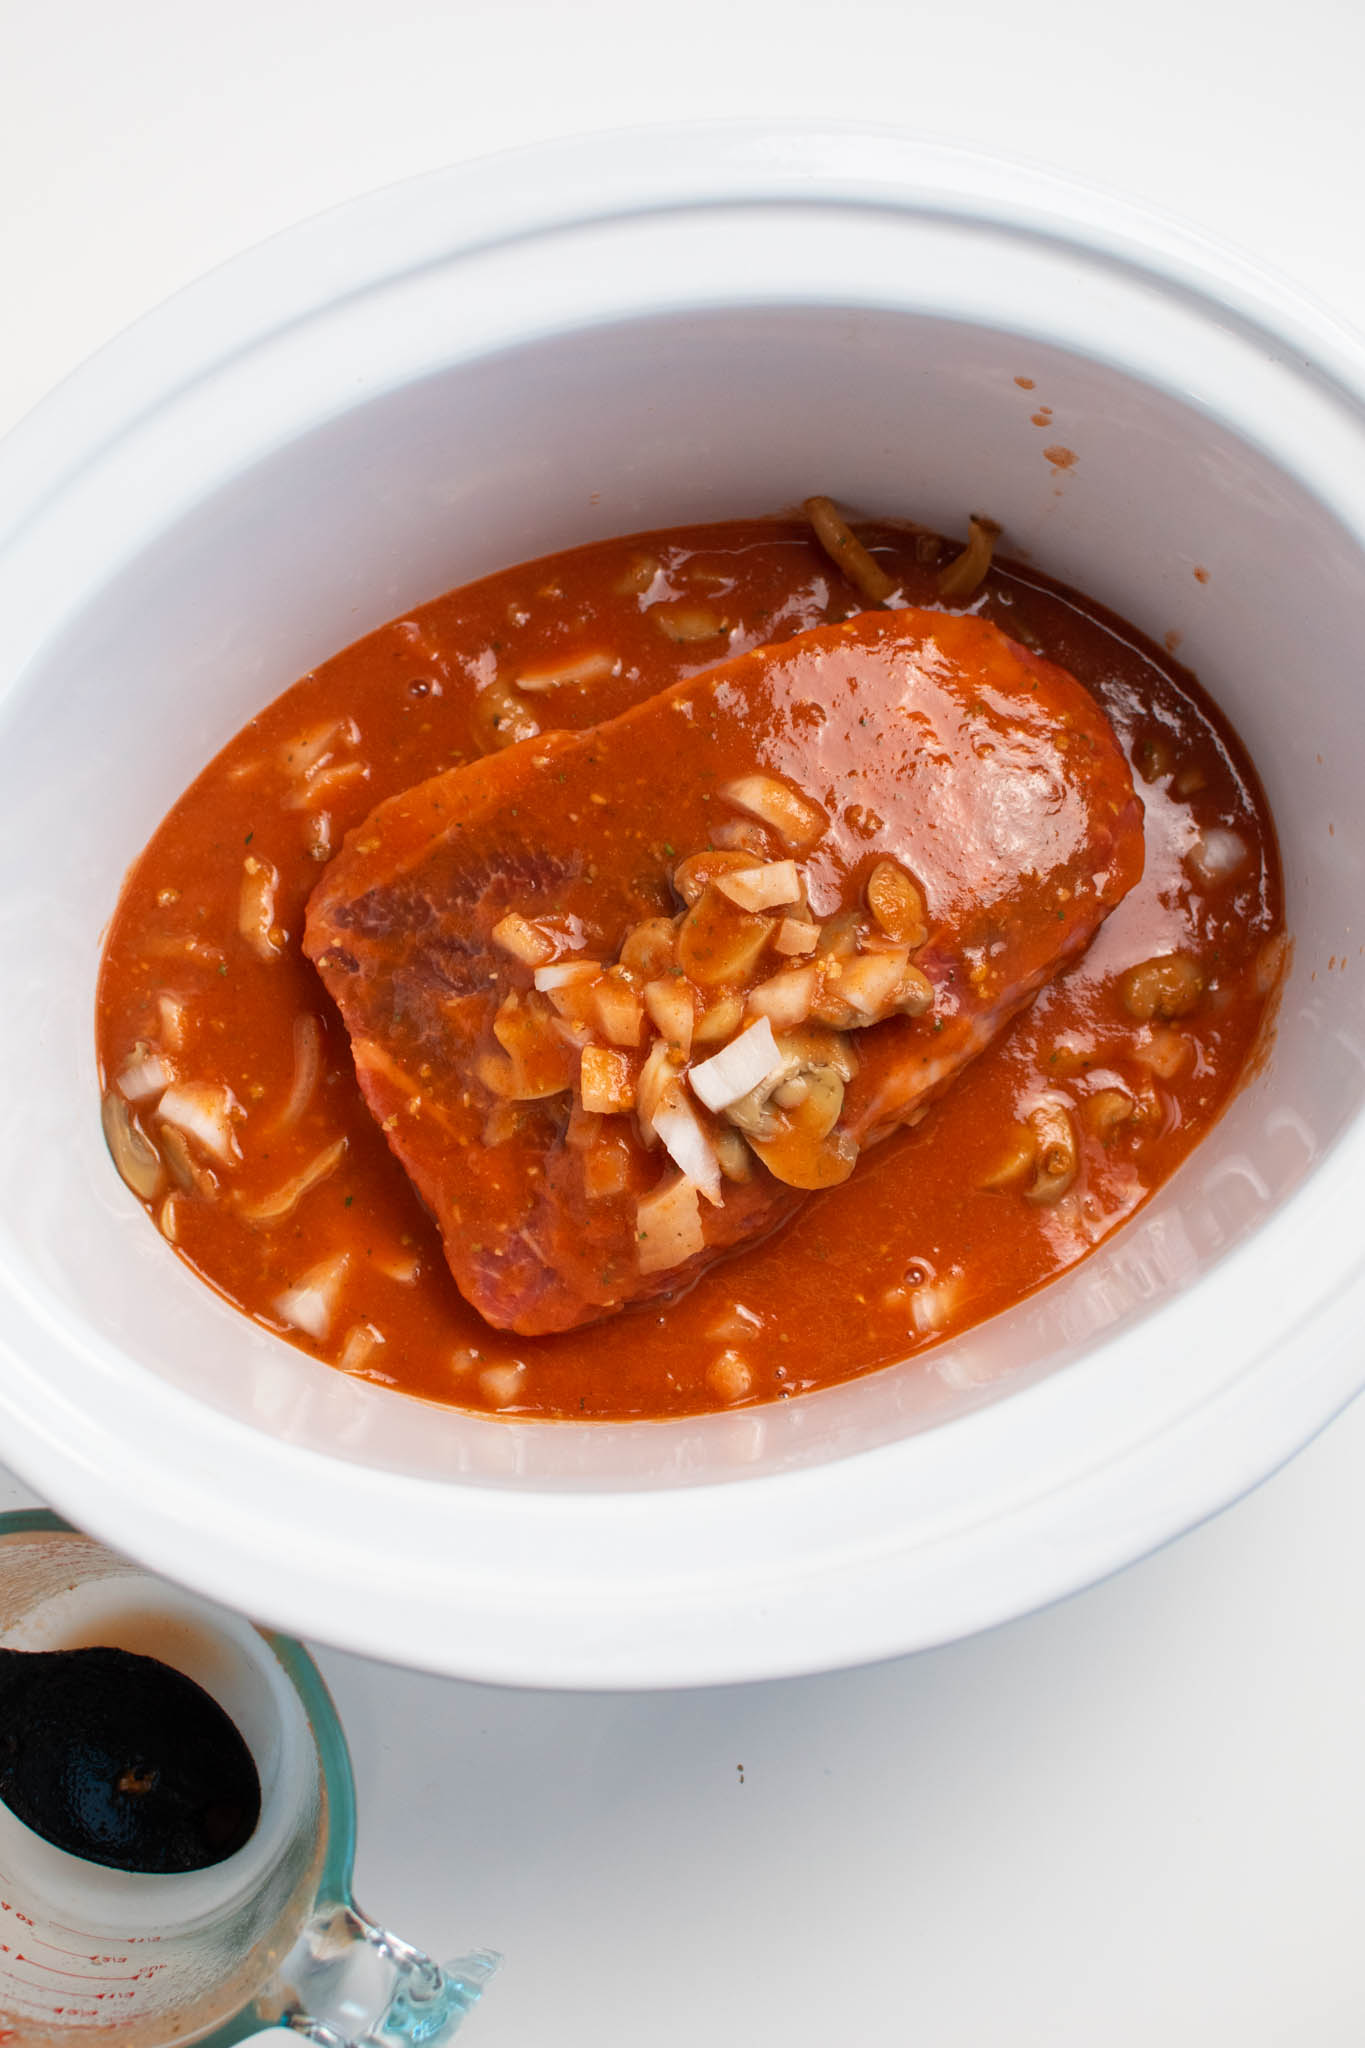 Tomato sauce, onions, and mushrooms on raw roast in Crock Pot.